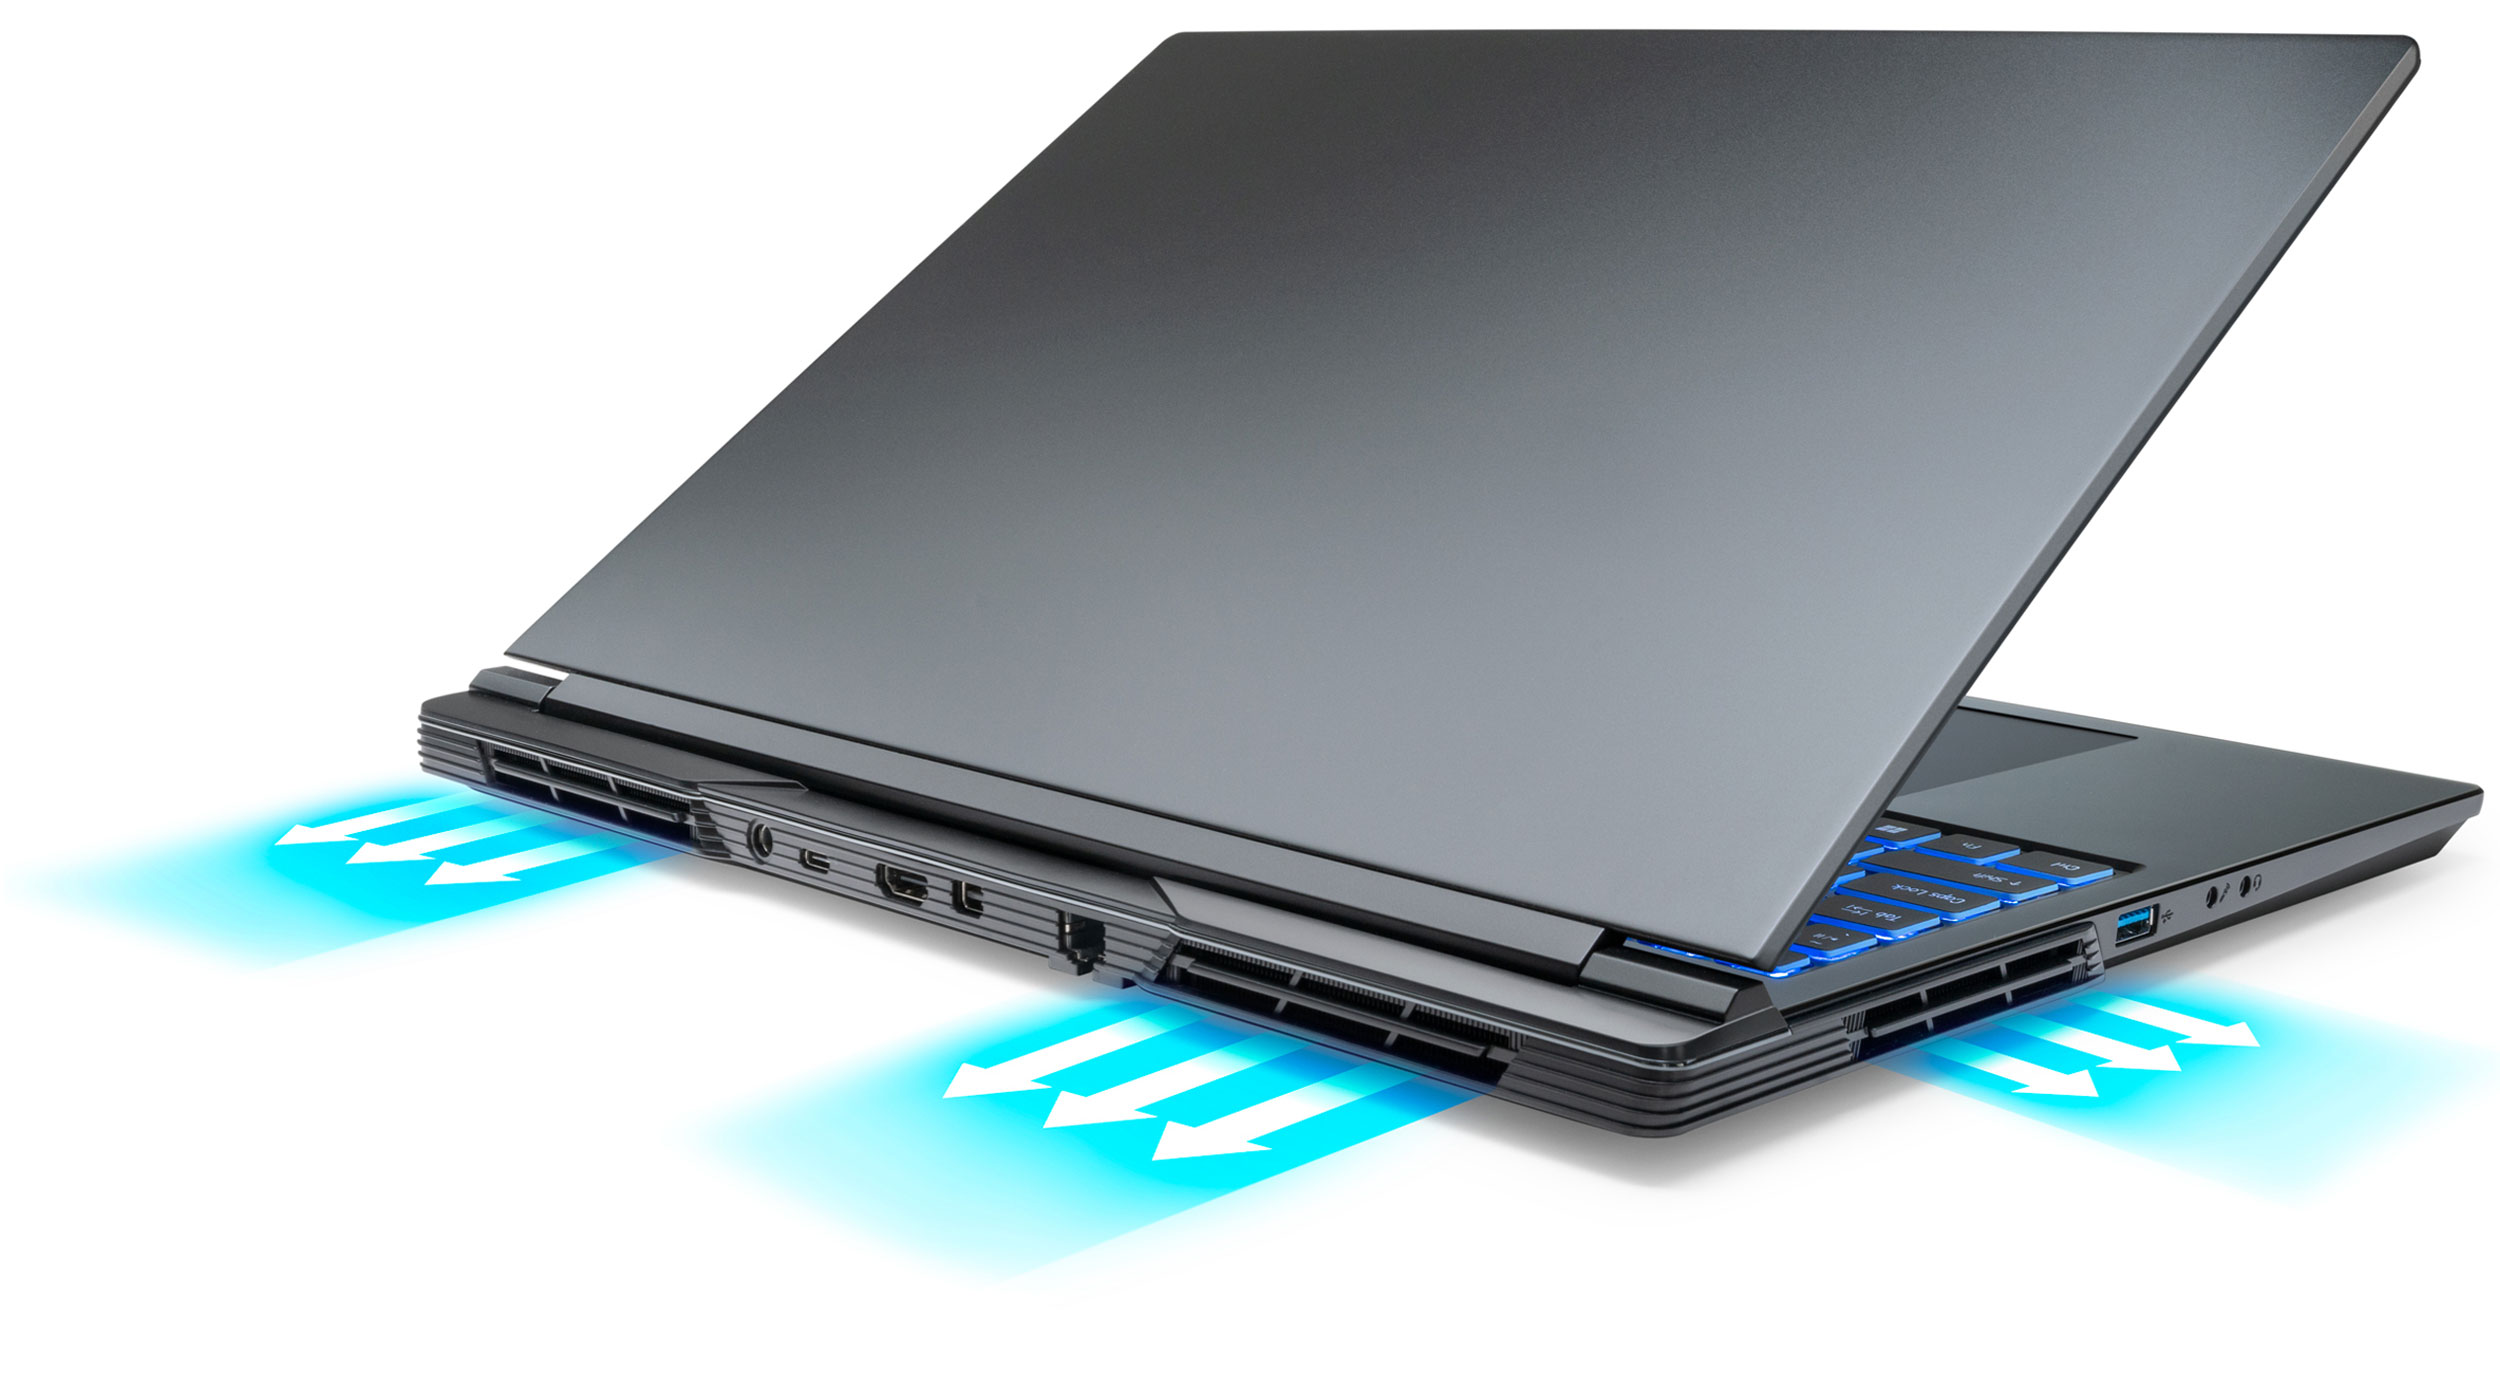 Nova laptop highlighting its three air exits cooling system